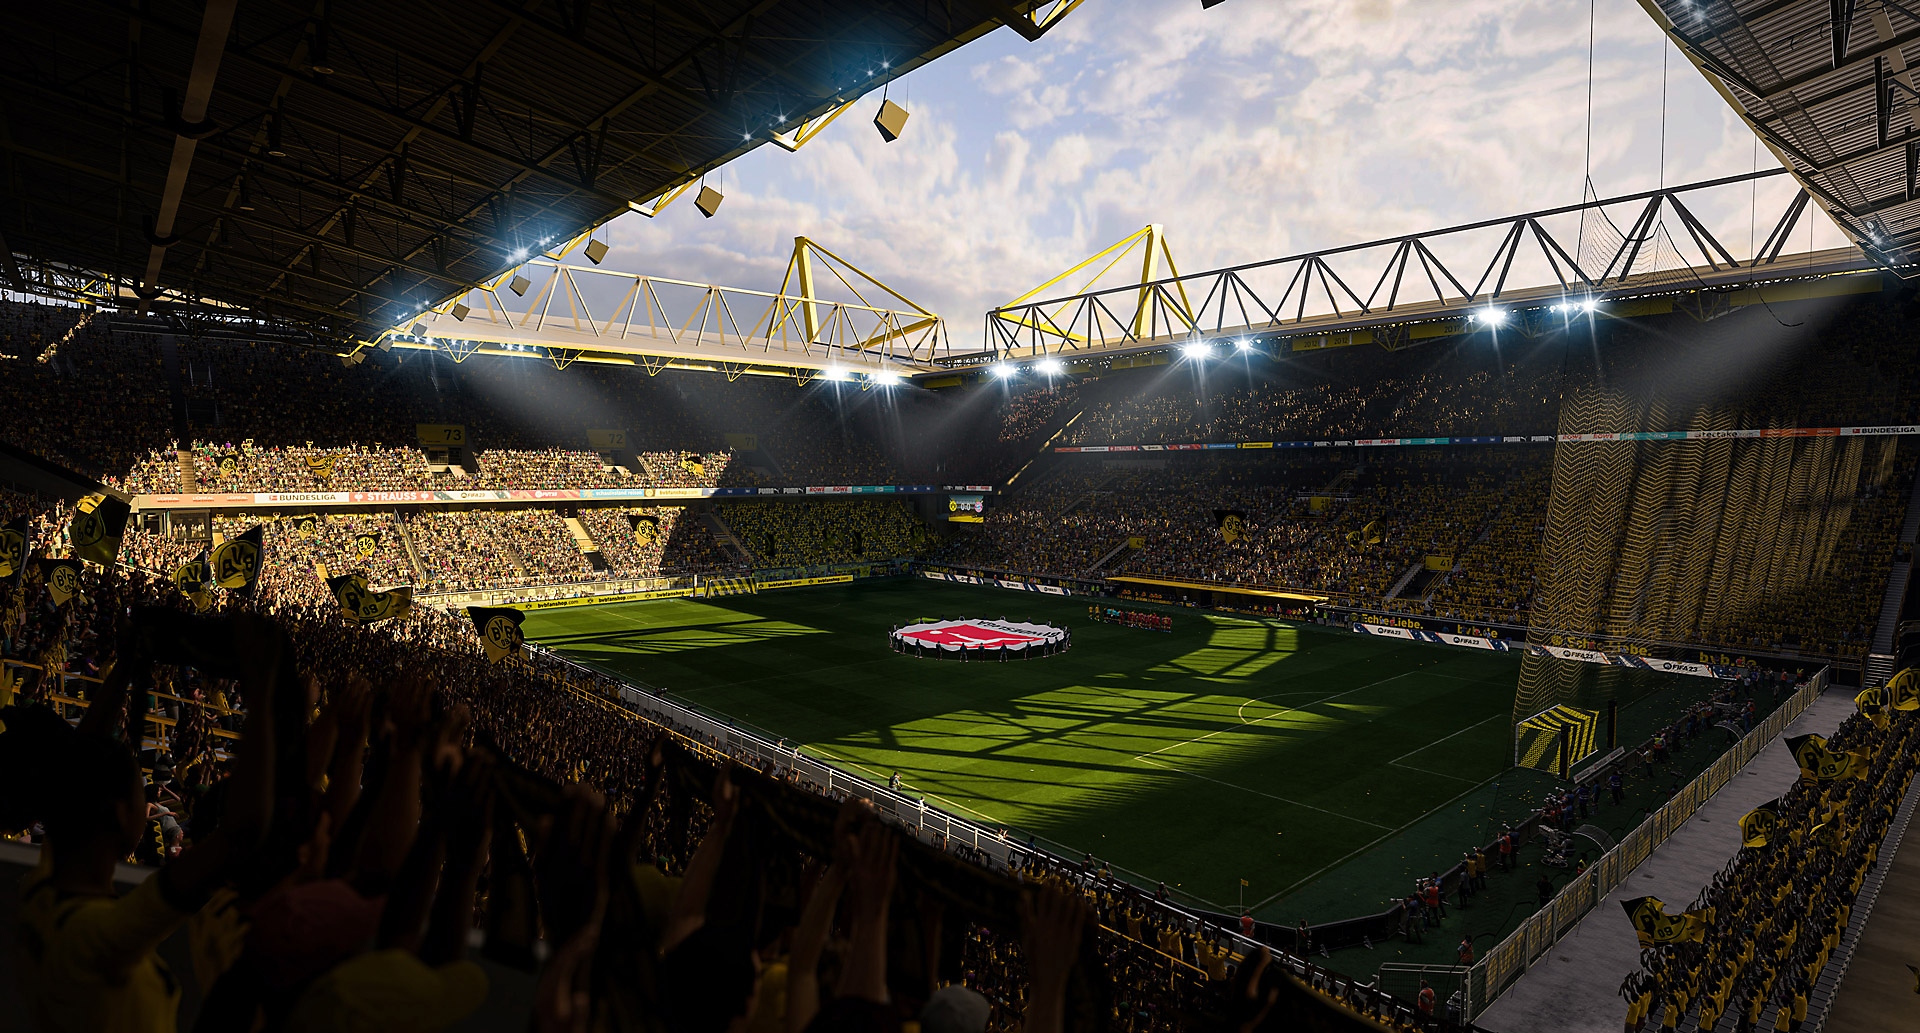 《EA Sports FIFA 23》沐浴在阳光之下的足球场截屏